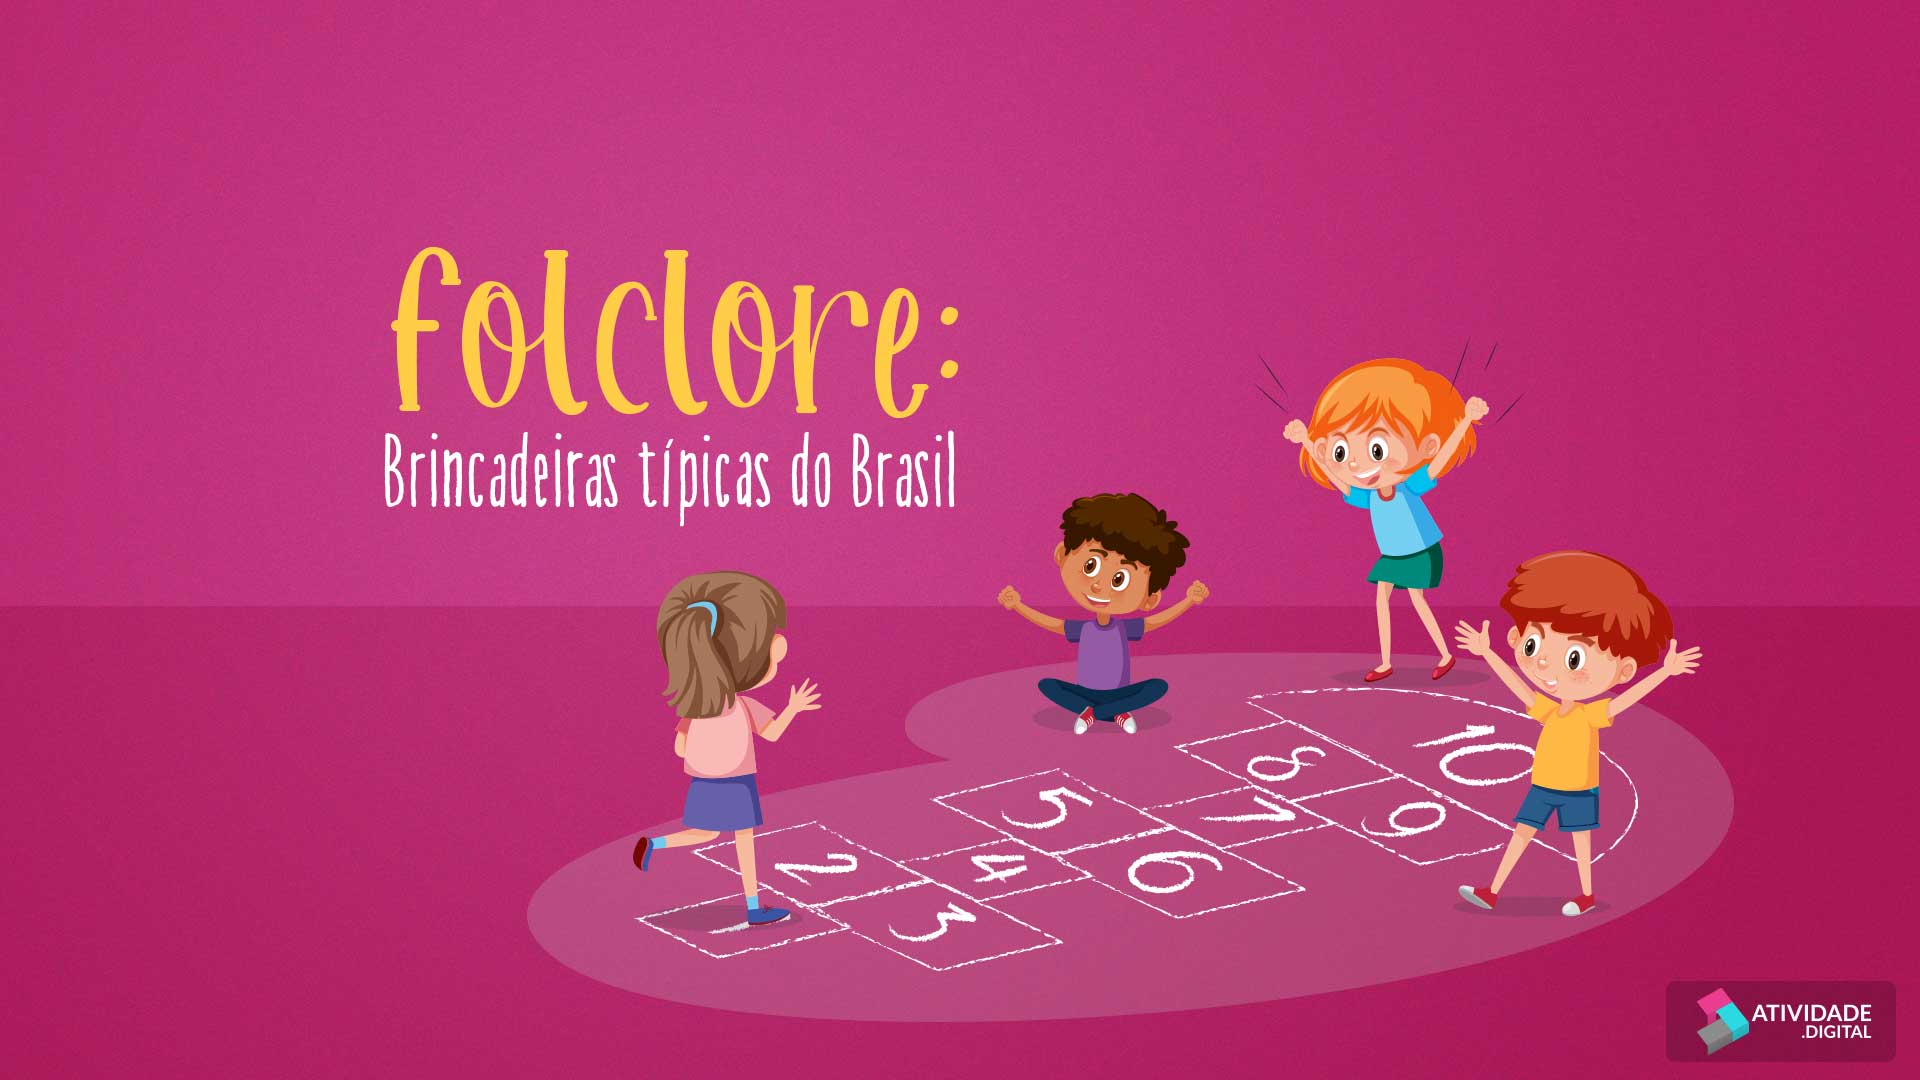 Folclore: Brincadeiras típicas do Brasil